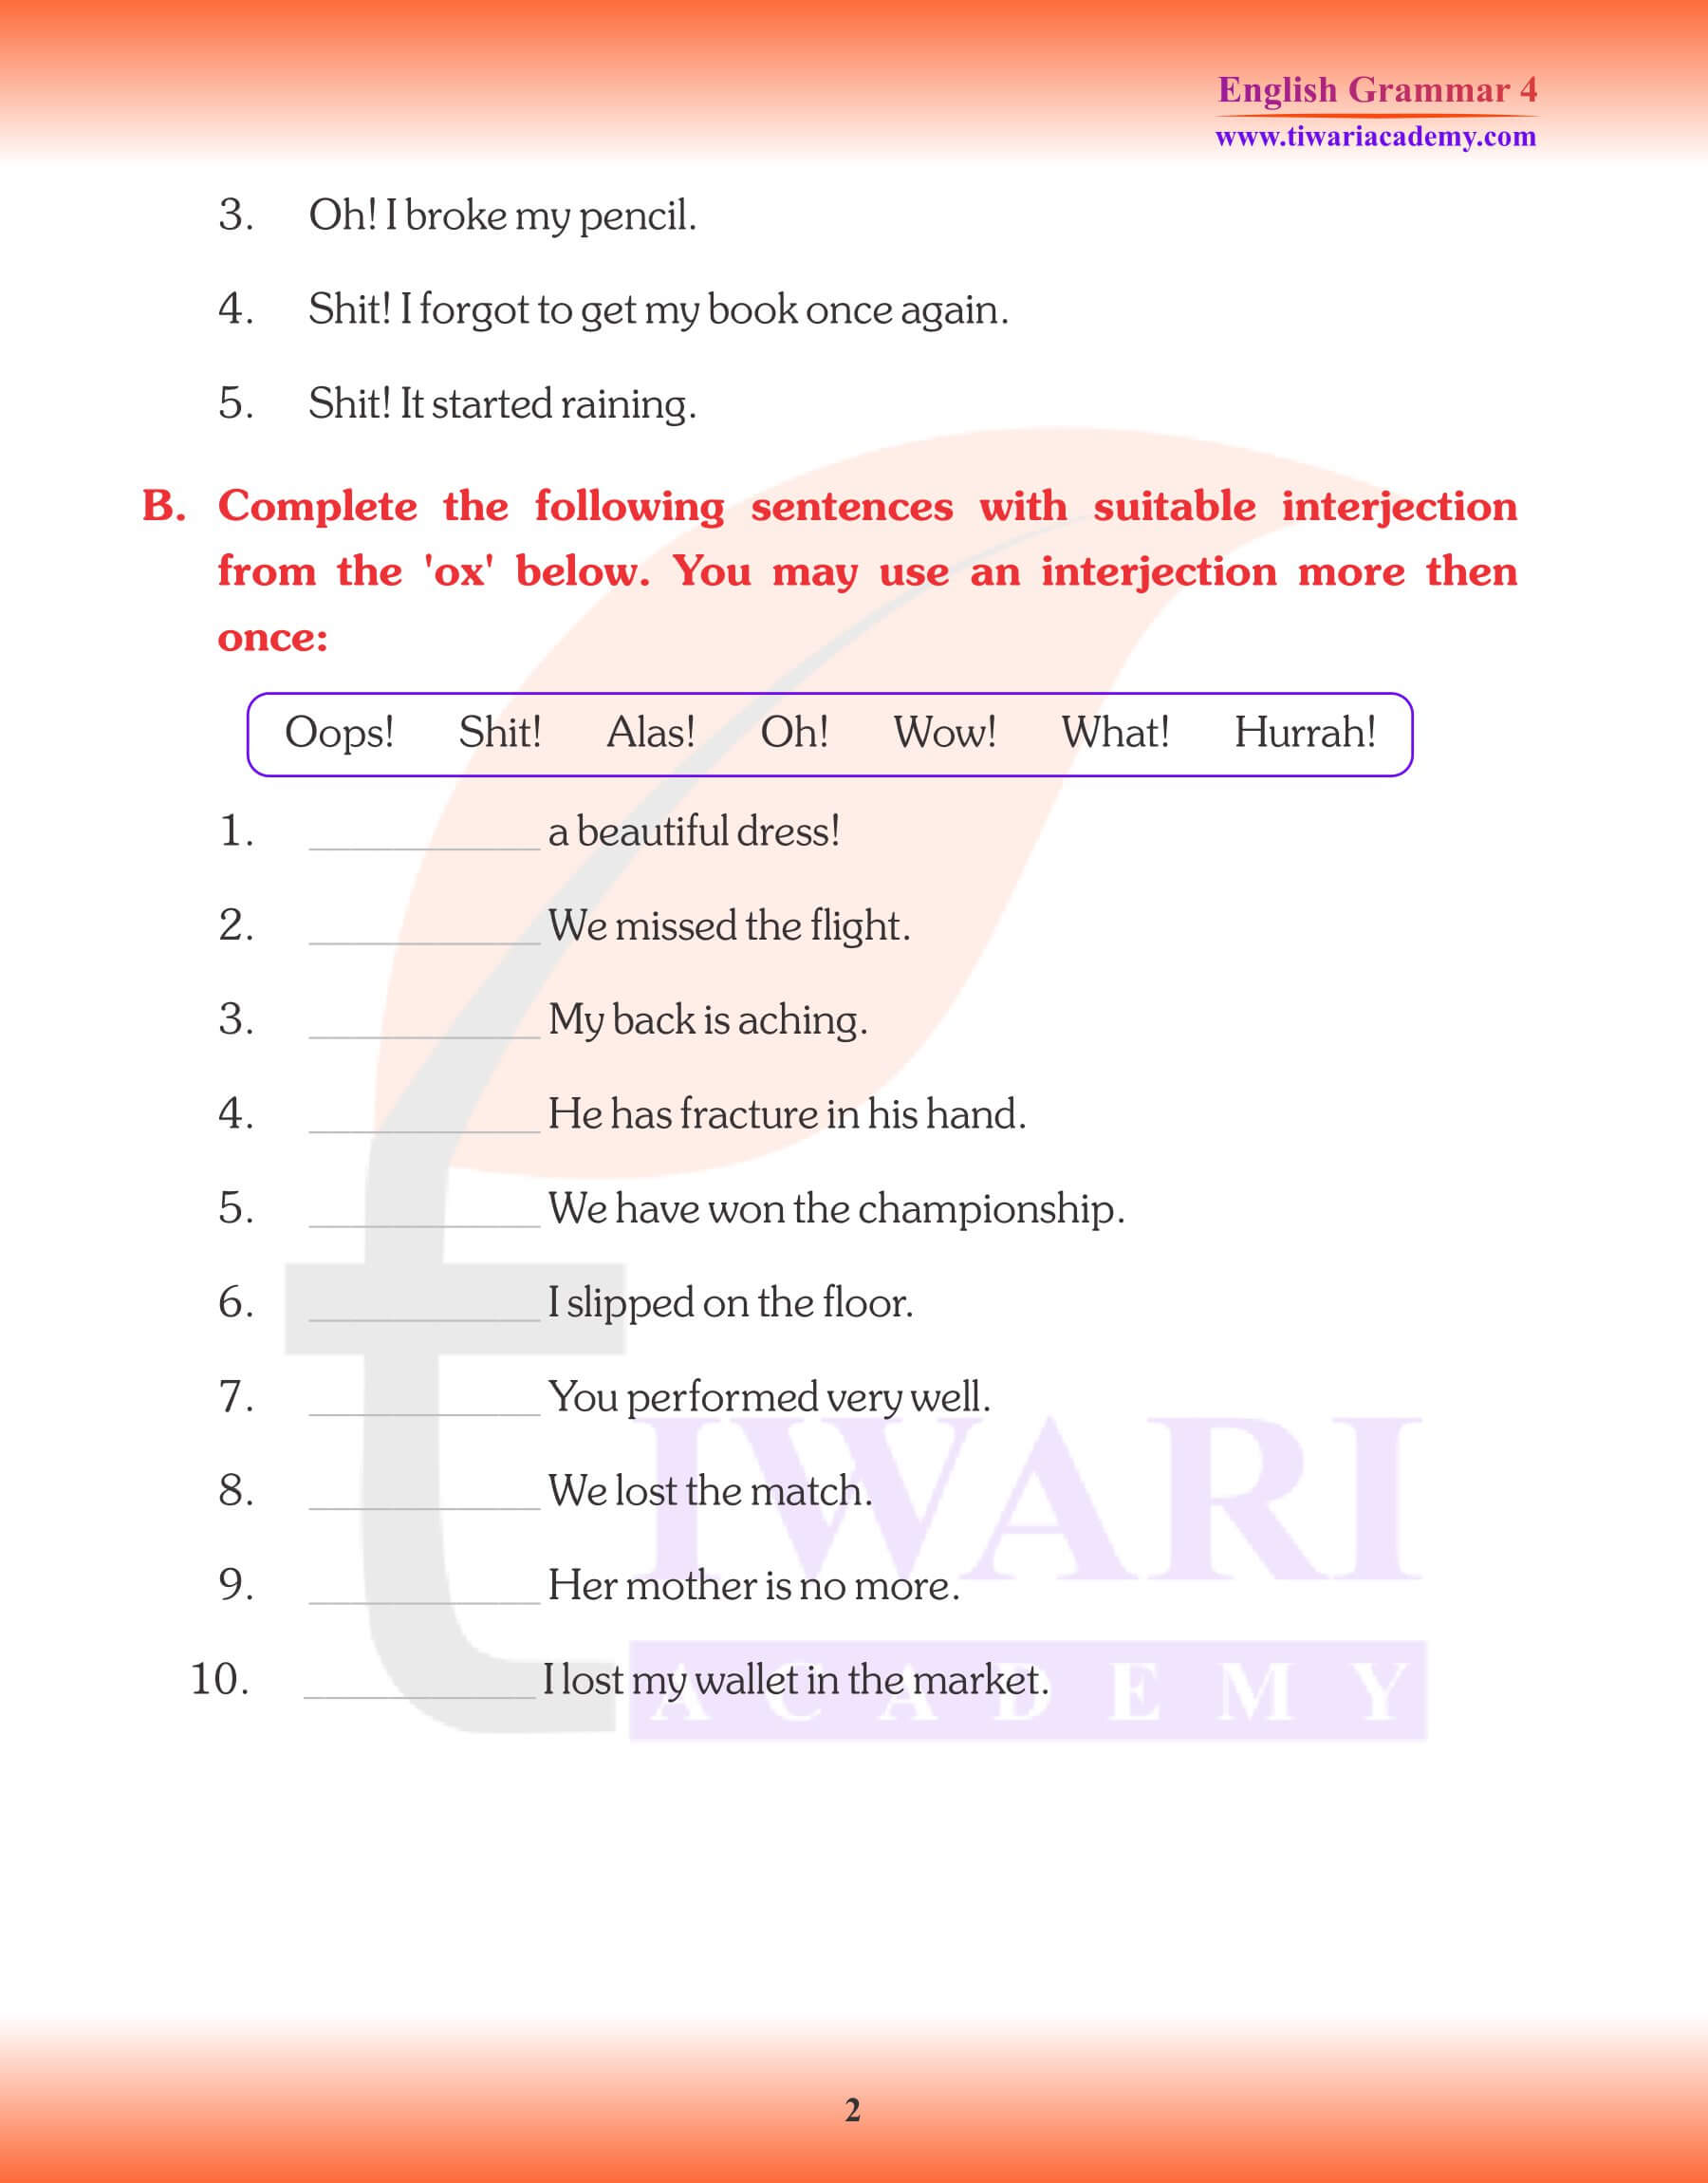 Class 4 English Grammar Interjection Exercises